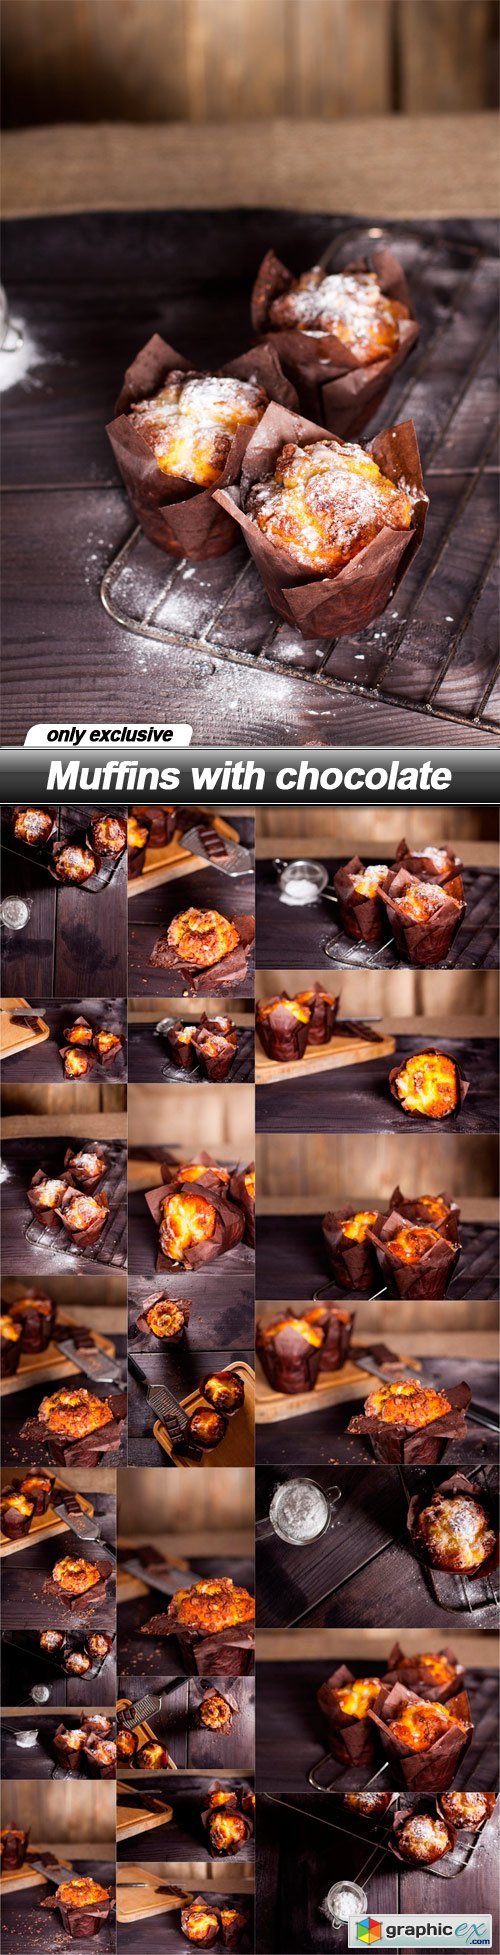 Muffins with chocolate - 23 UHQ JPEG